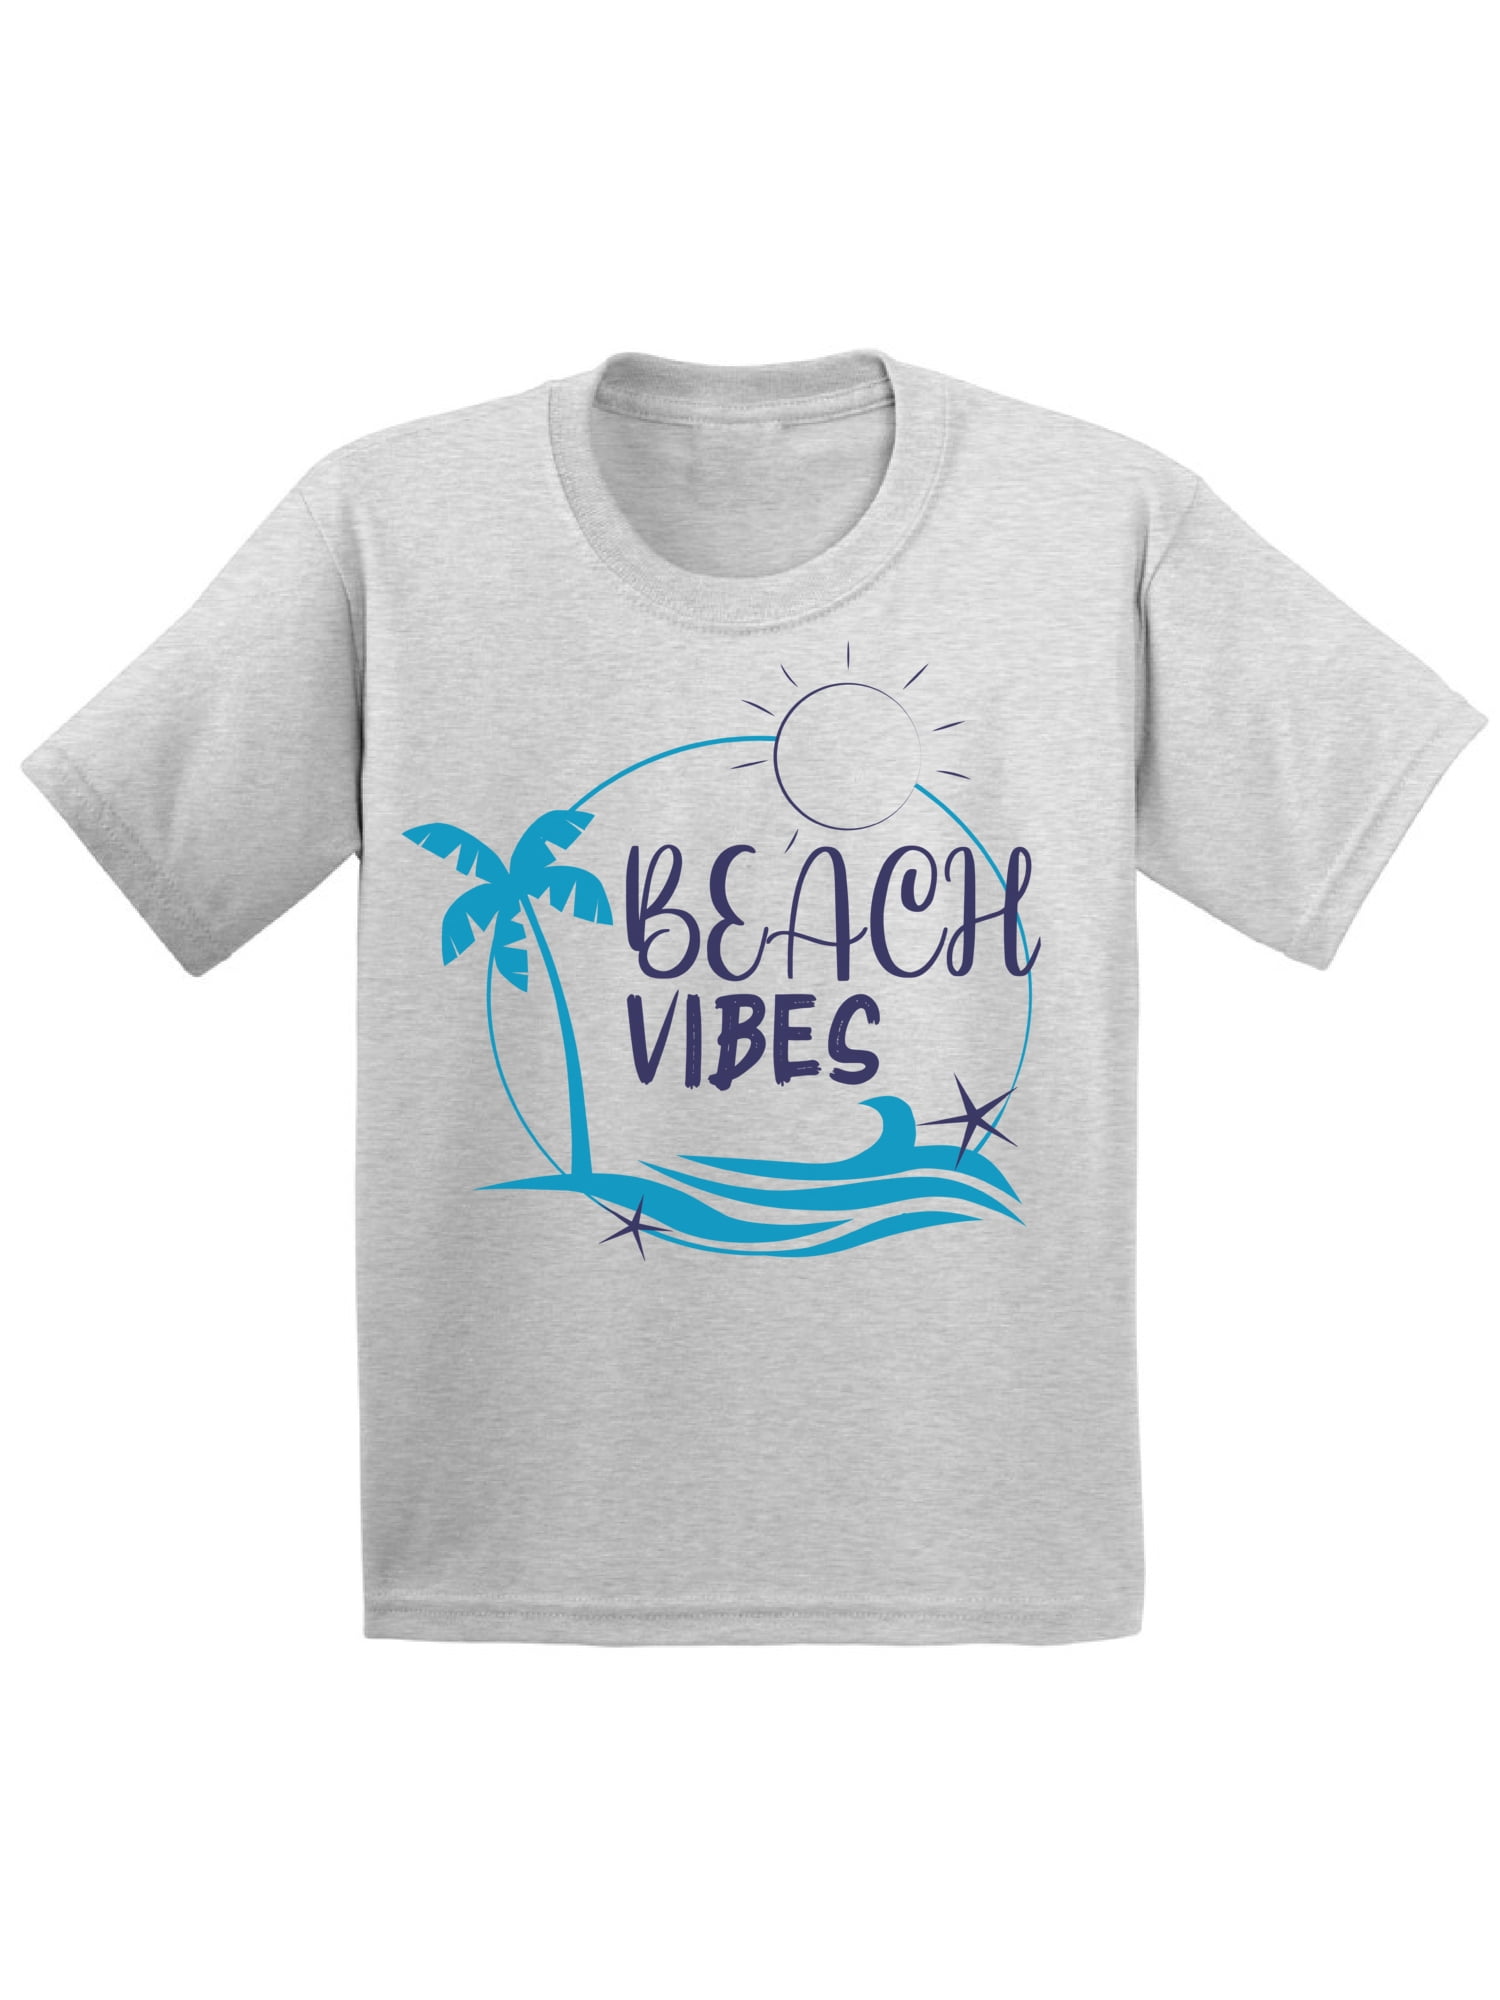 Baby Boys Dip Dye T Shirt Short Sleeve 100% Cotton Summer Top Holiday Beach 0-24 